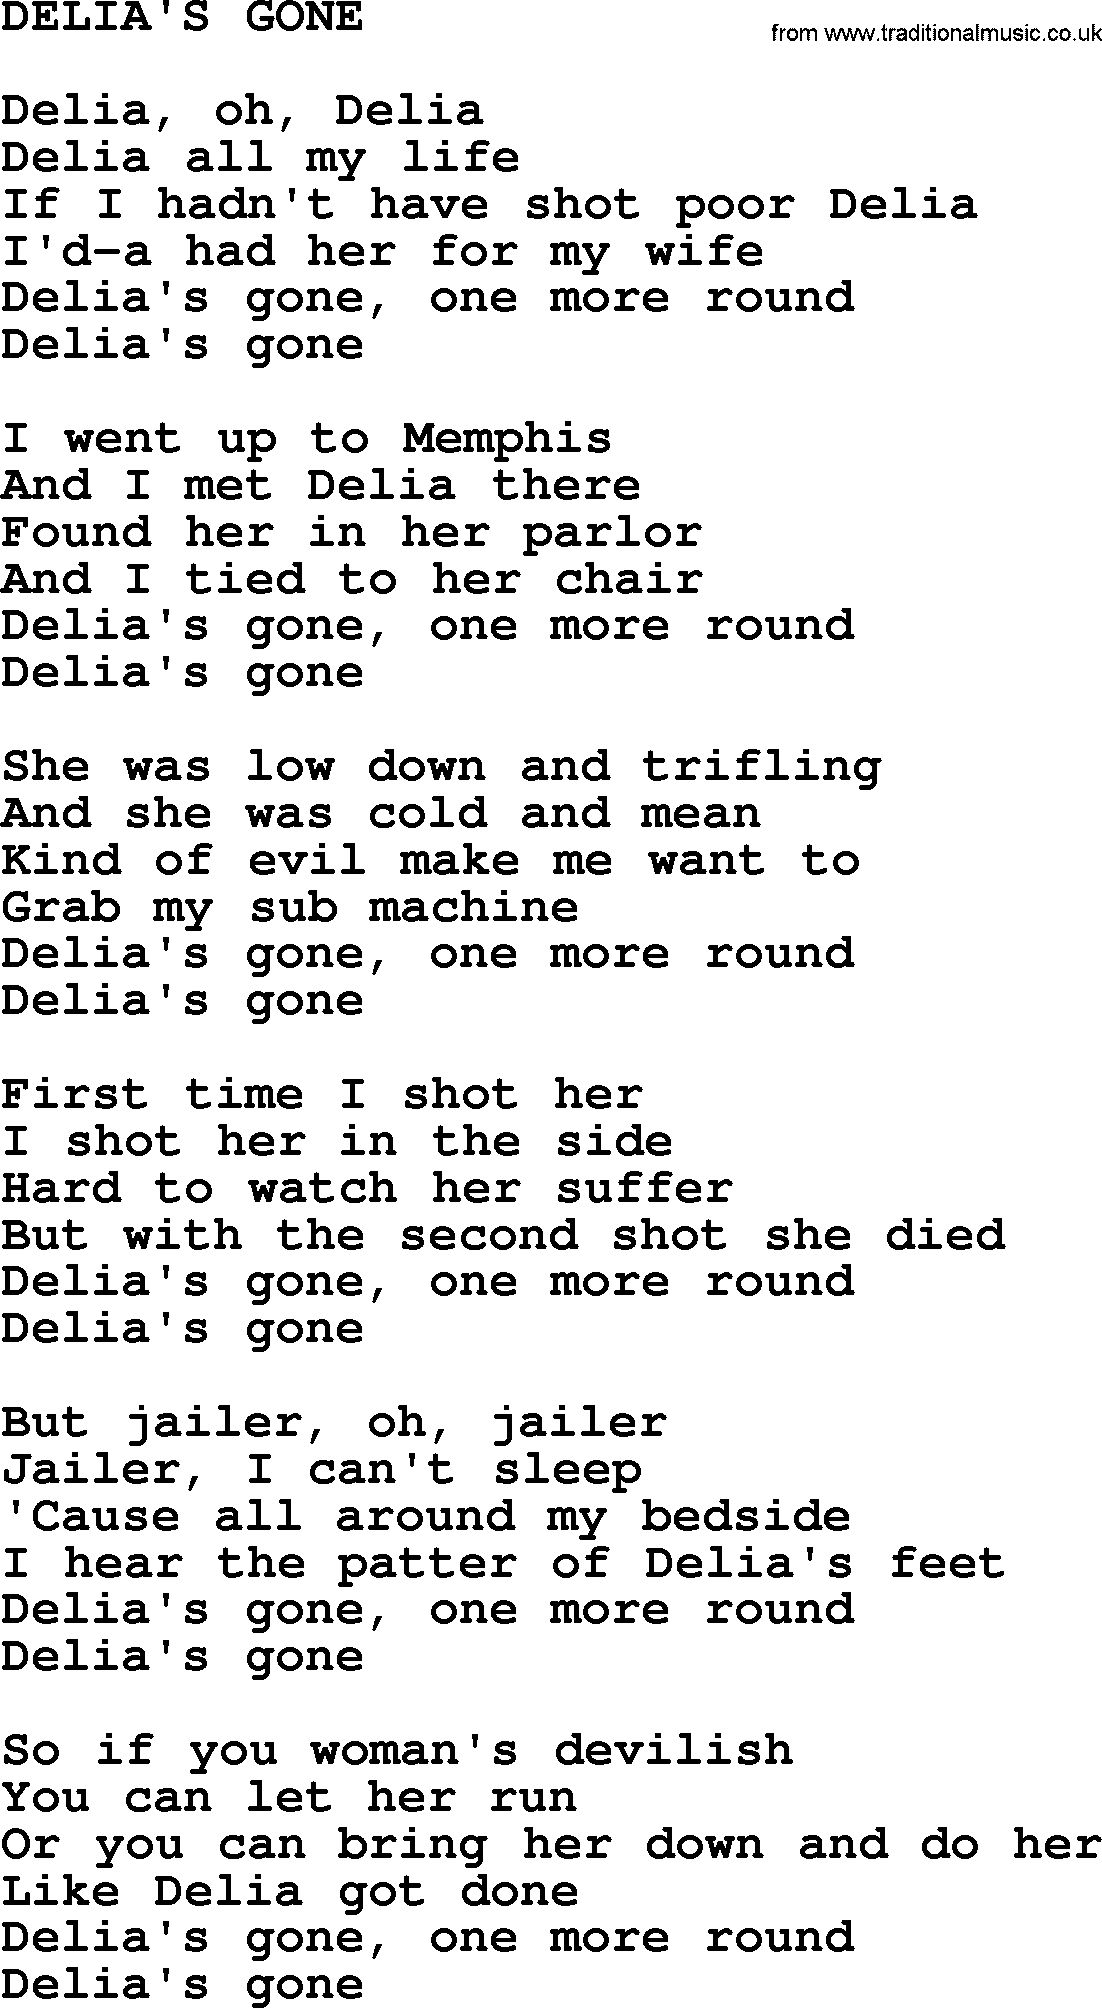 Johnny Cash song Delia's Gone.txt lyrics